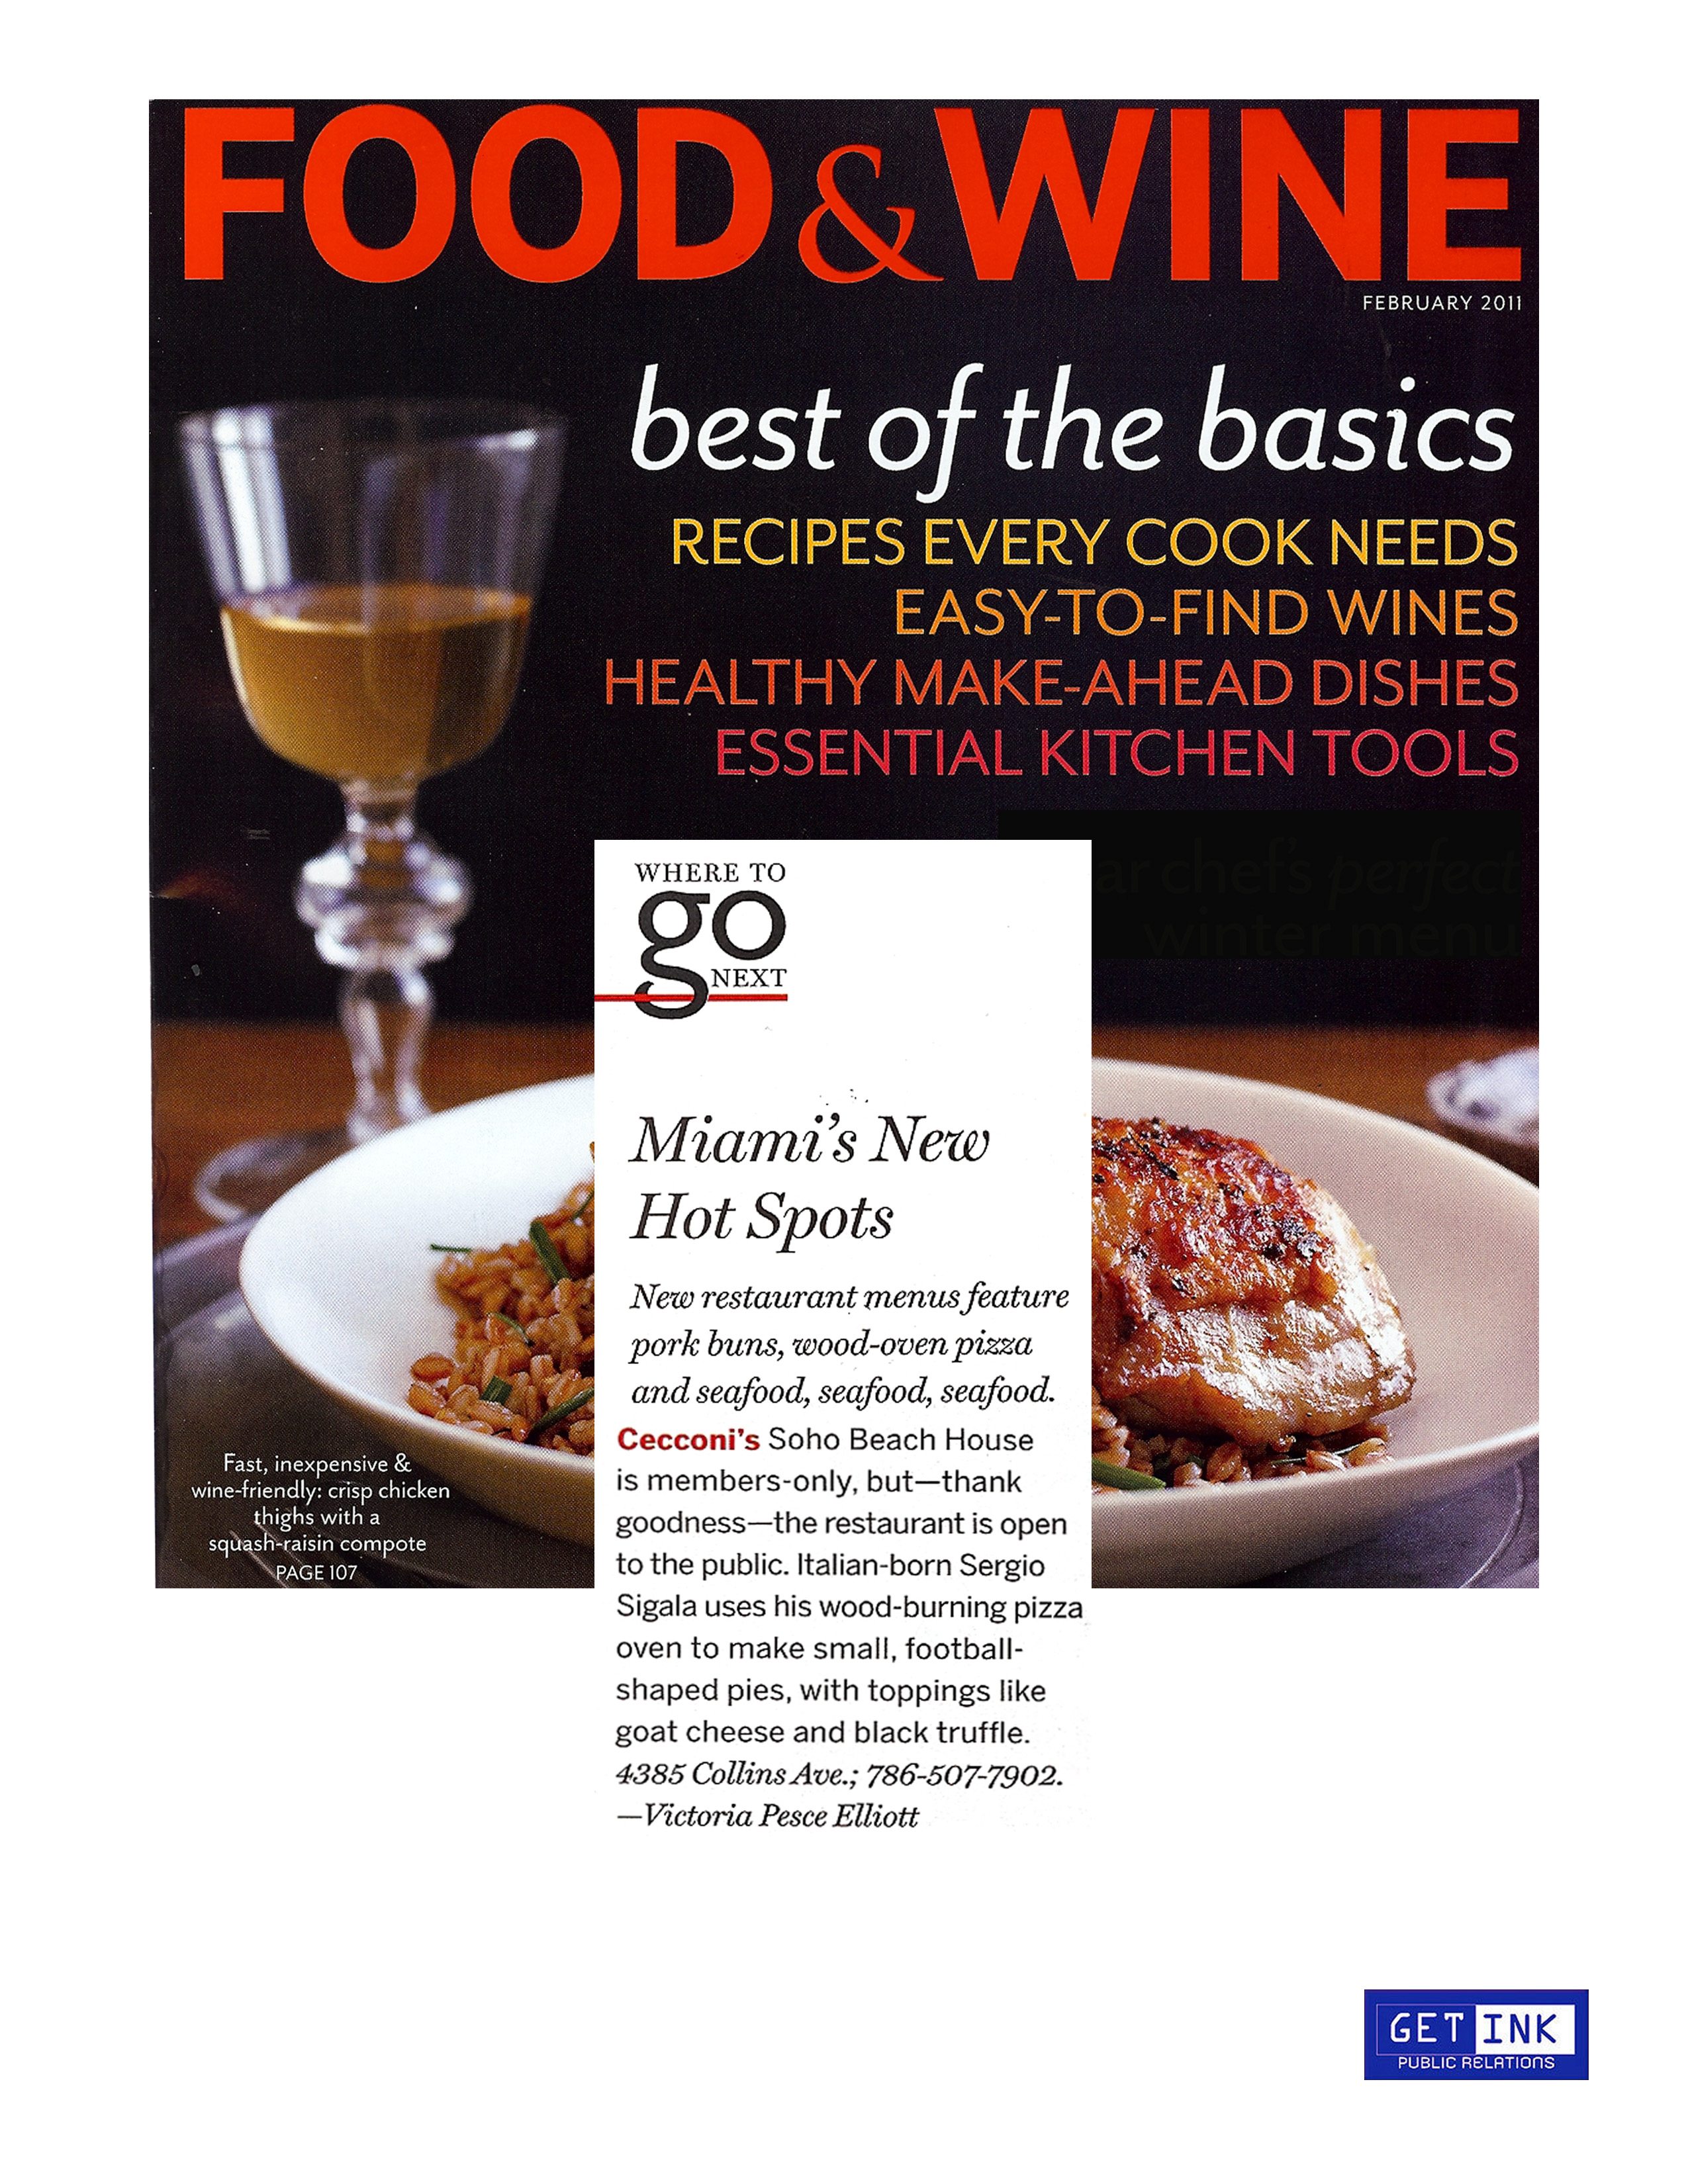 Cecconi's Miami Soho Beach House Food & Wine Magazine - Get Ink PR